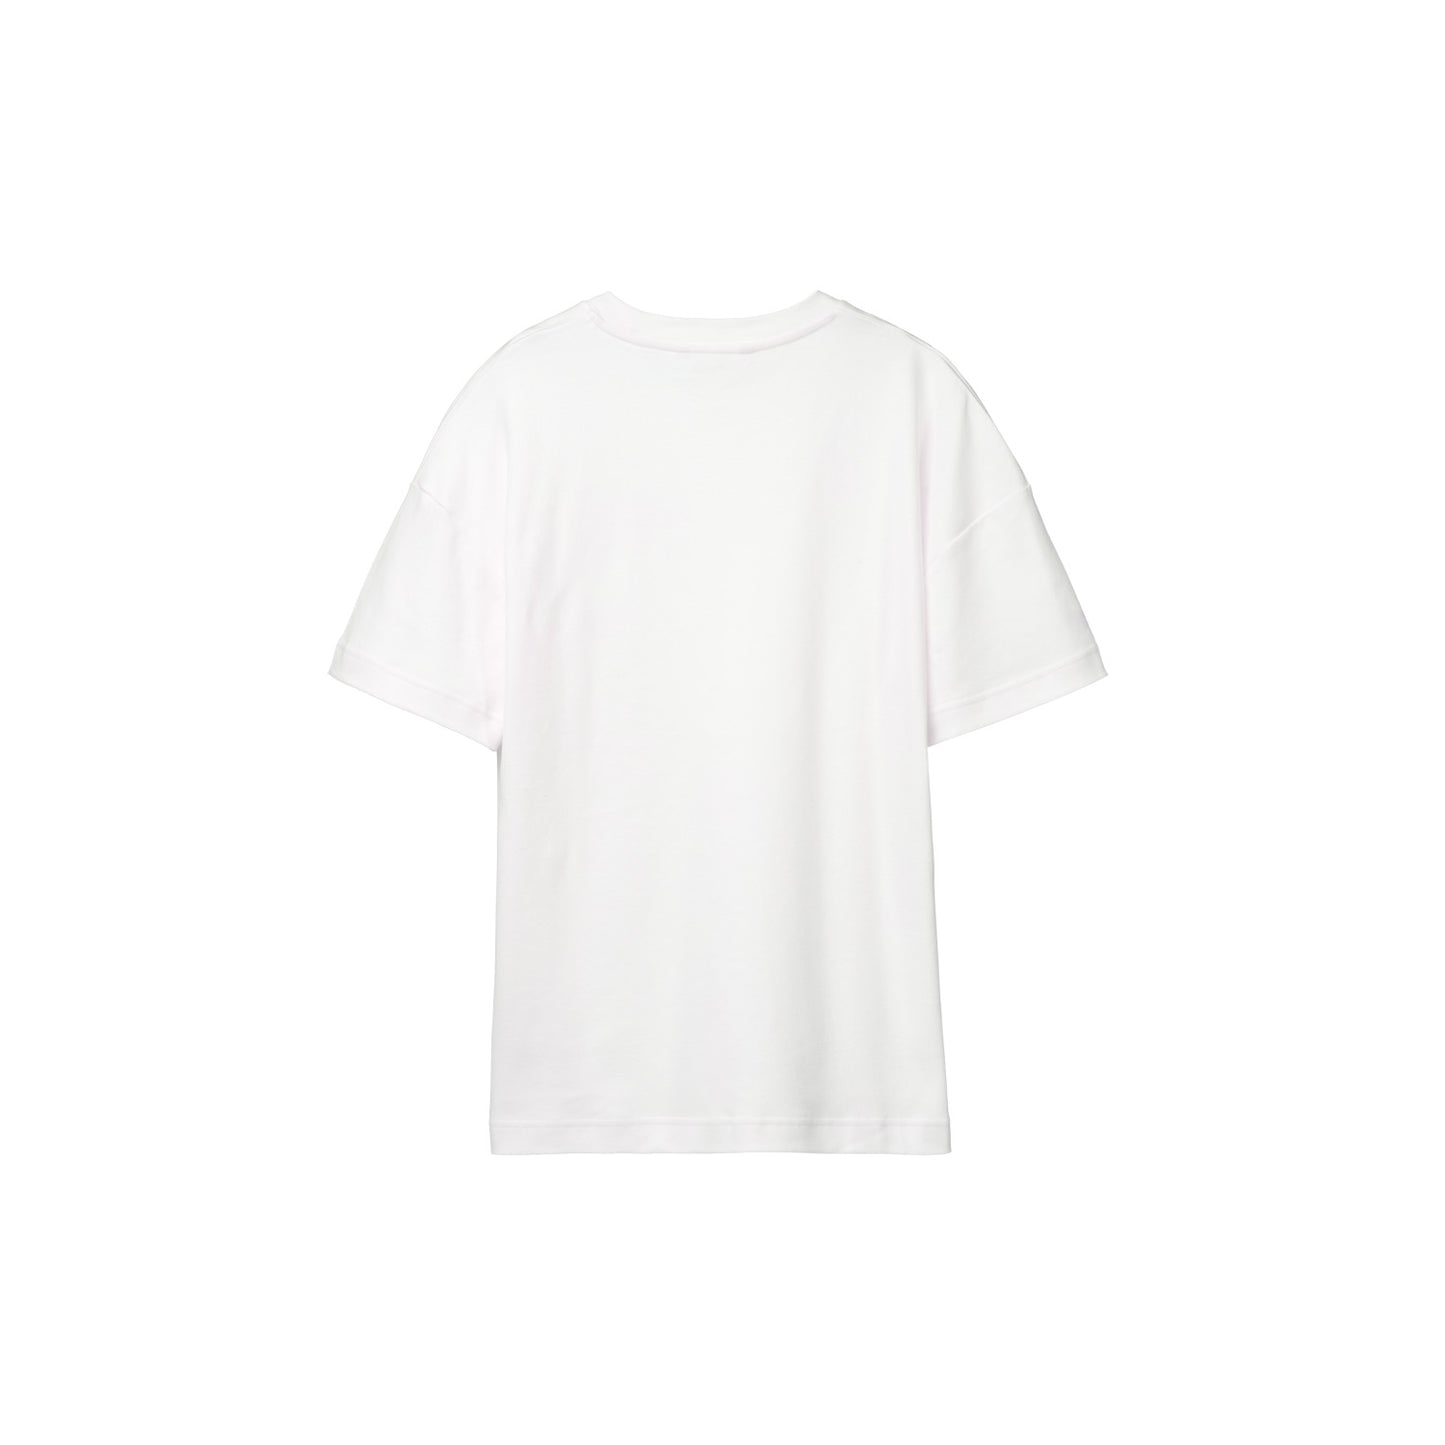 pinqponq-T-Shirt-Unisex-Dandelion-White-Yin-Yang-unisex-back